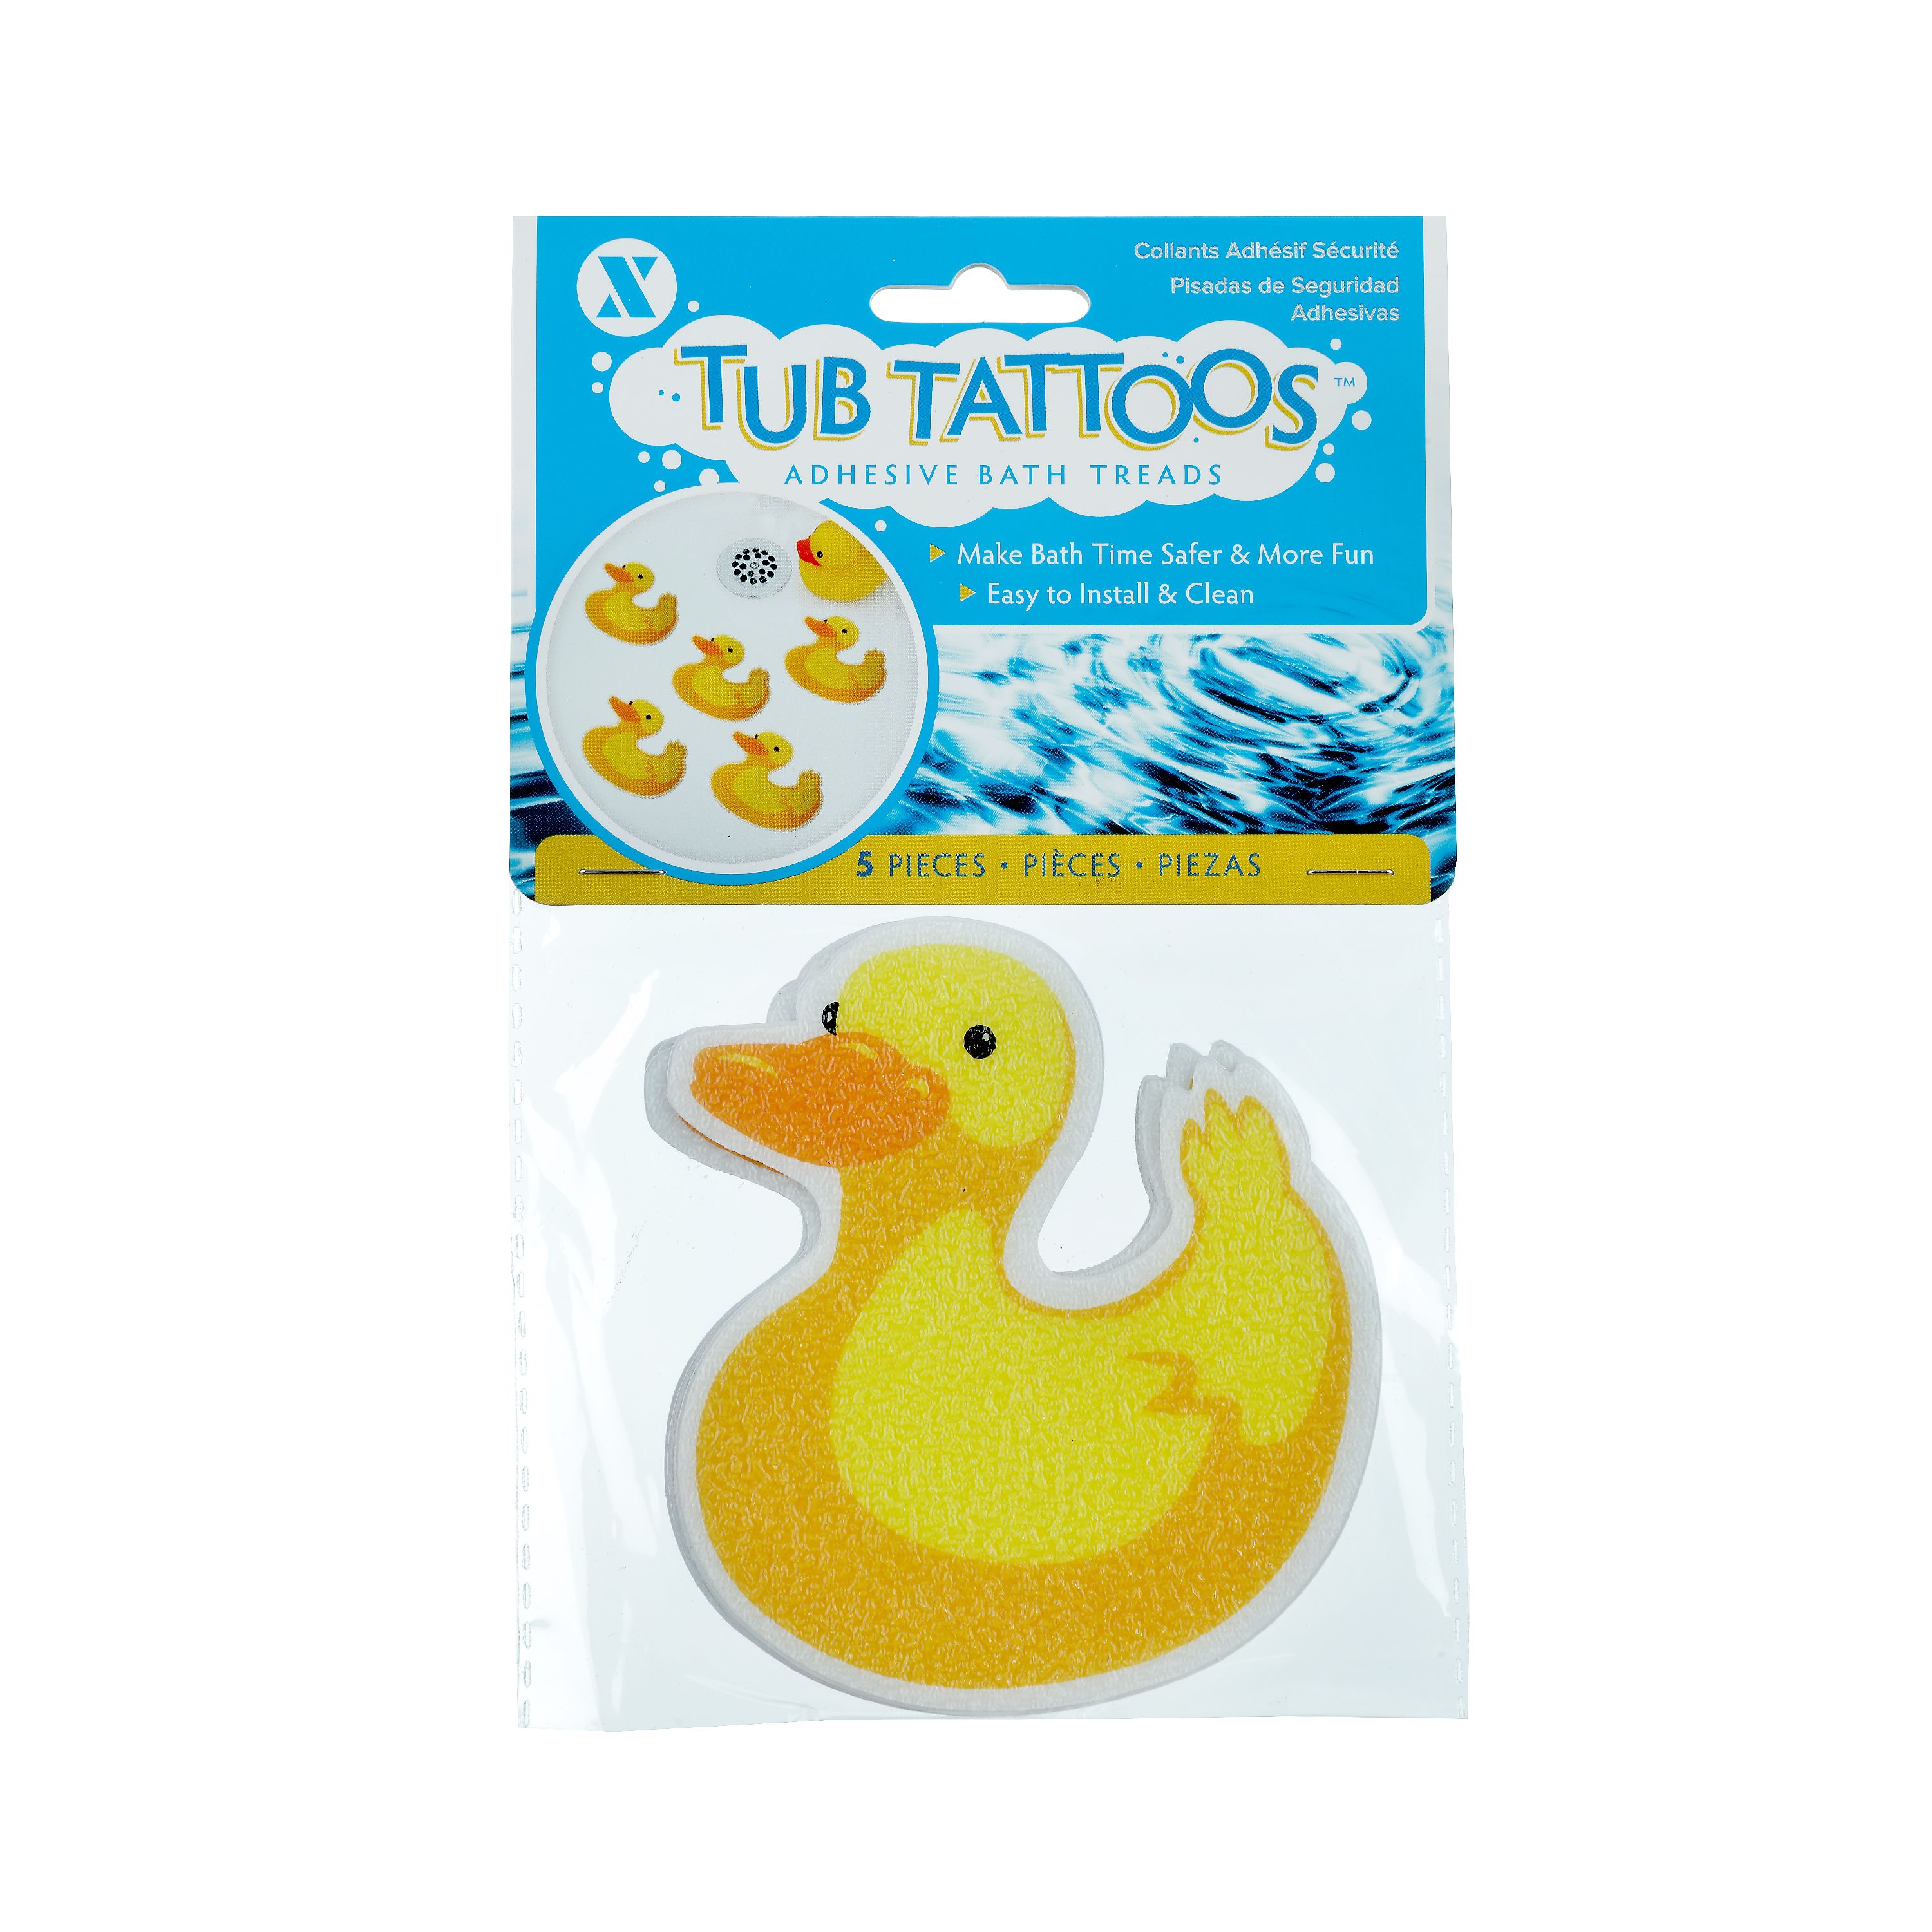 SlipX Solutions Adhesive Bath Treads: Tub Tattoos - image 4 of 4